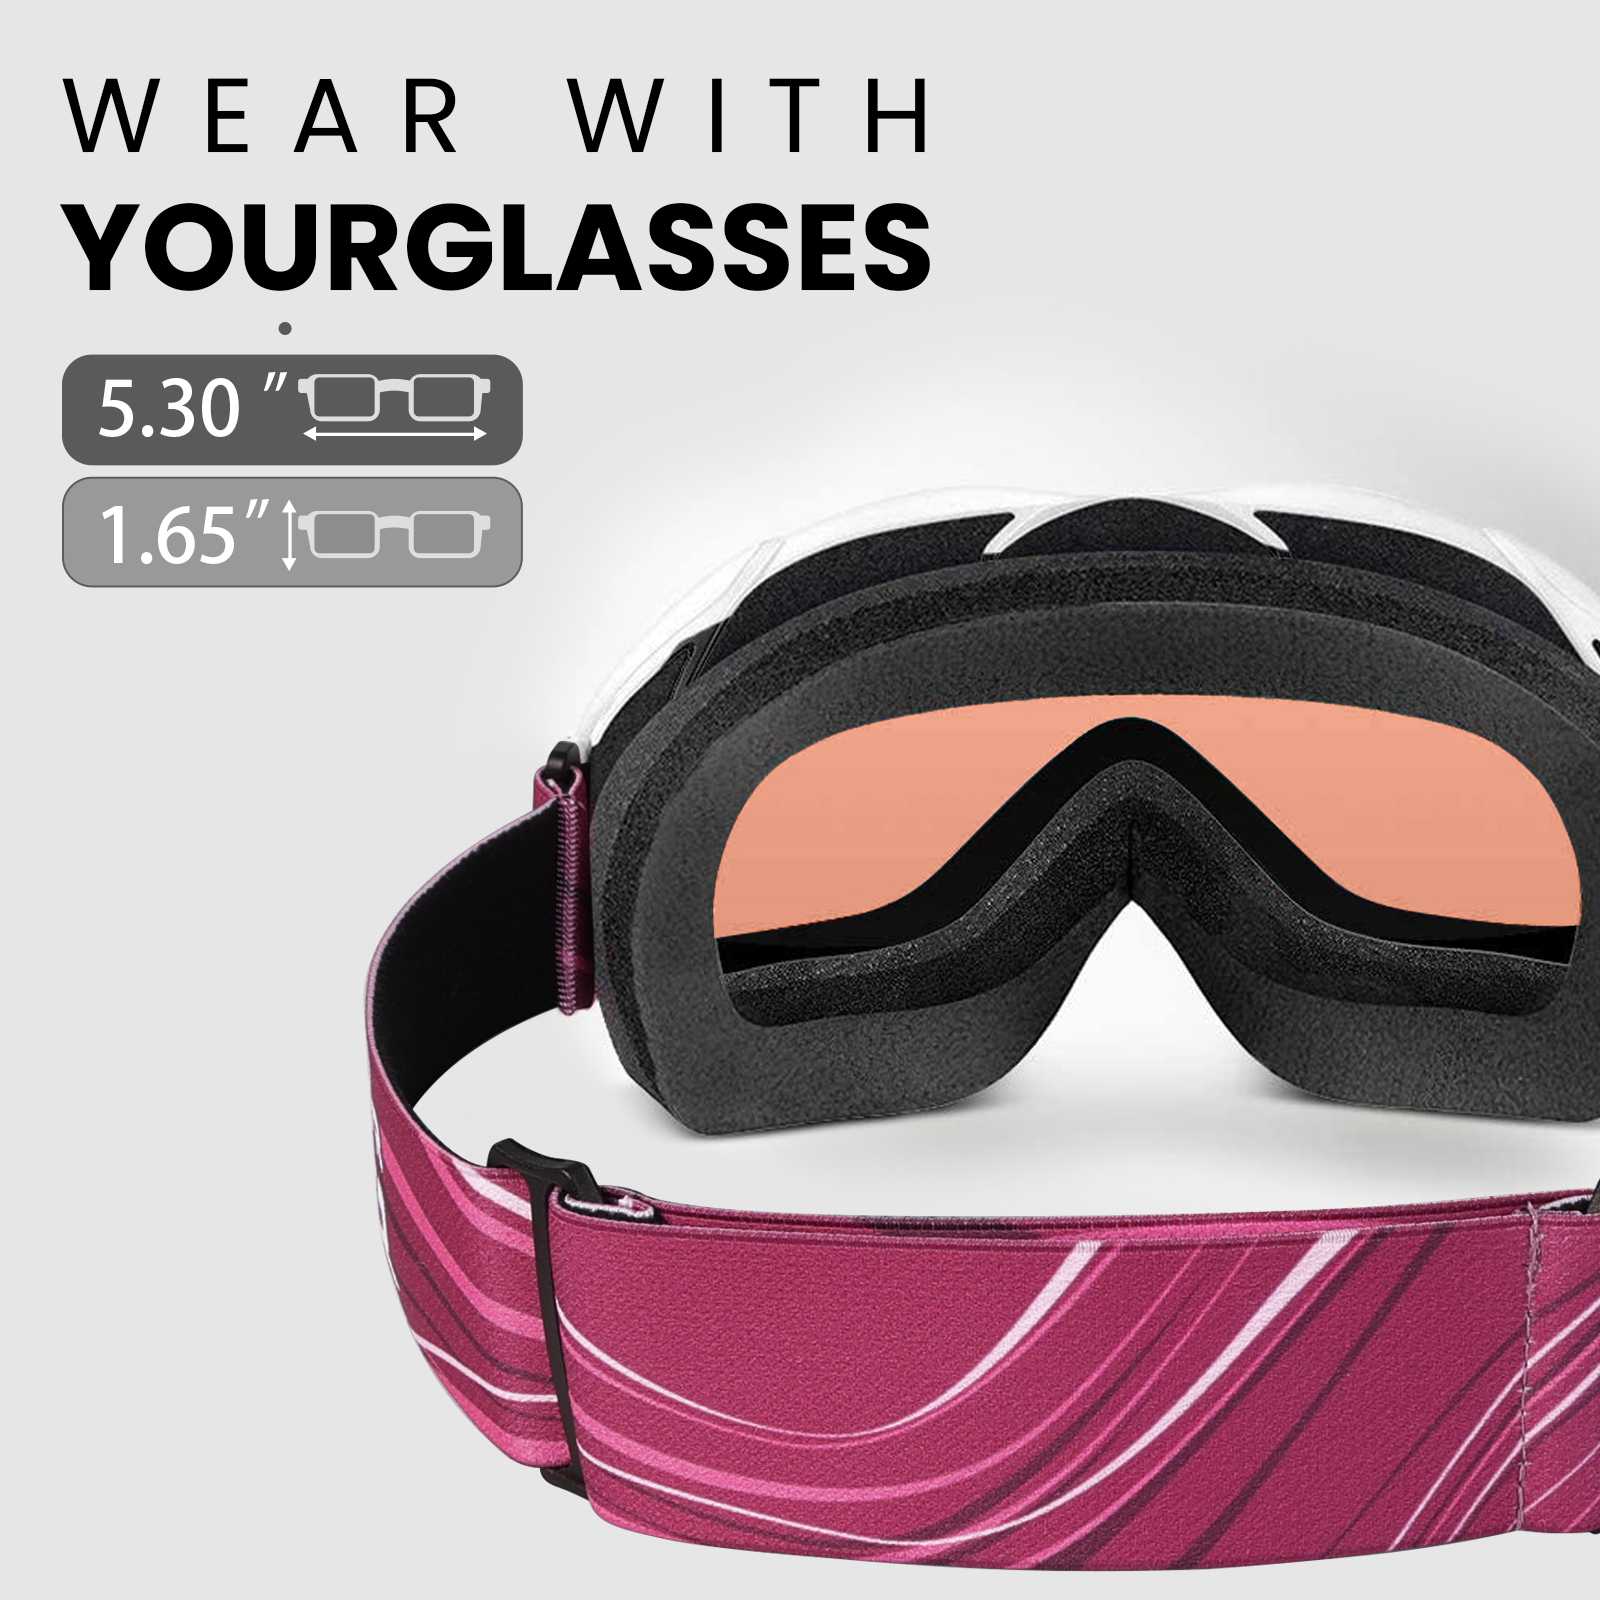  ACURE Ski Goggles, OTG - Over Glasses Snow Snowboard Goggles,  Anti Fog, 100% UV400 Protection for Men Women Kids : Sports & Outdoors